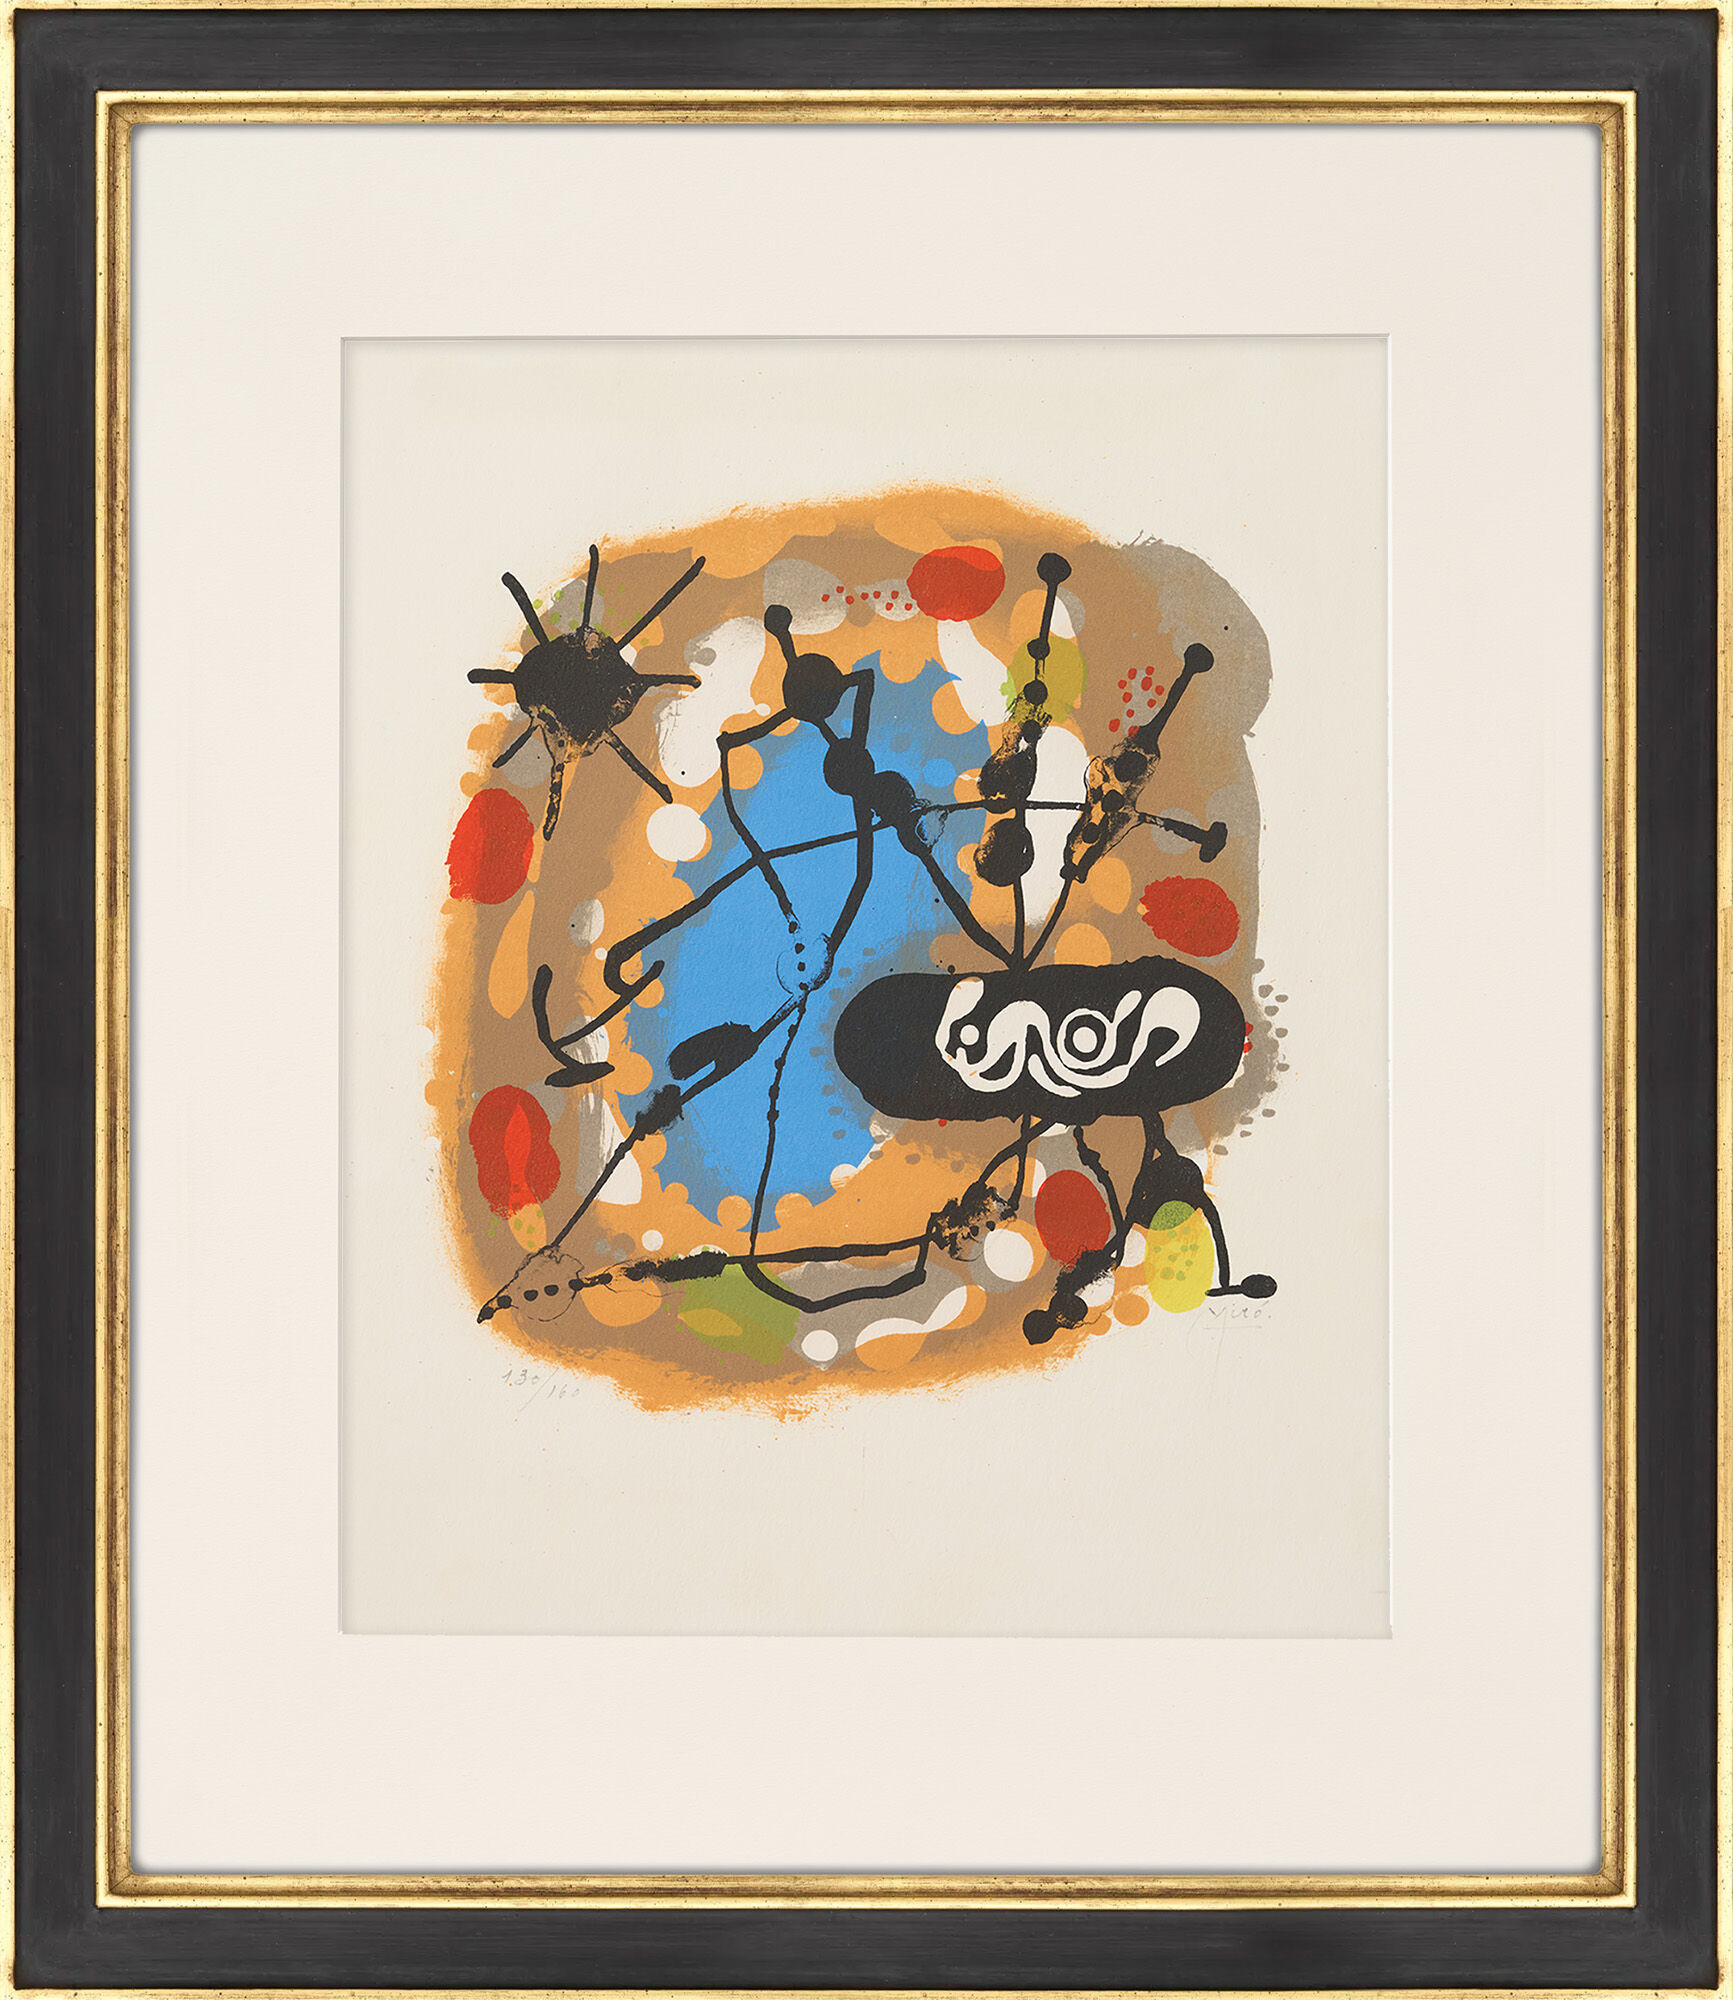 Picture "Atmosphera Miro" (1959) by Joan Miró